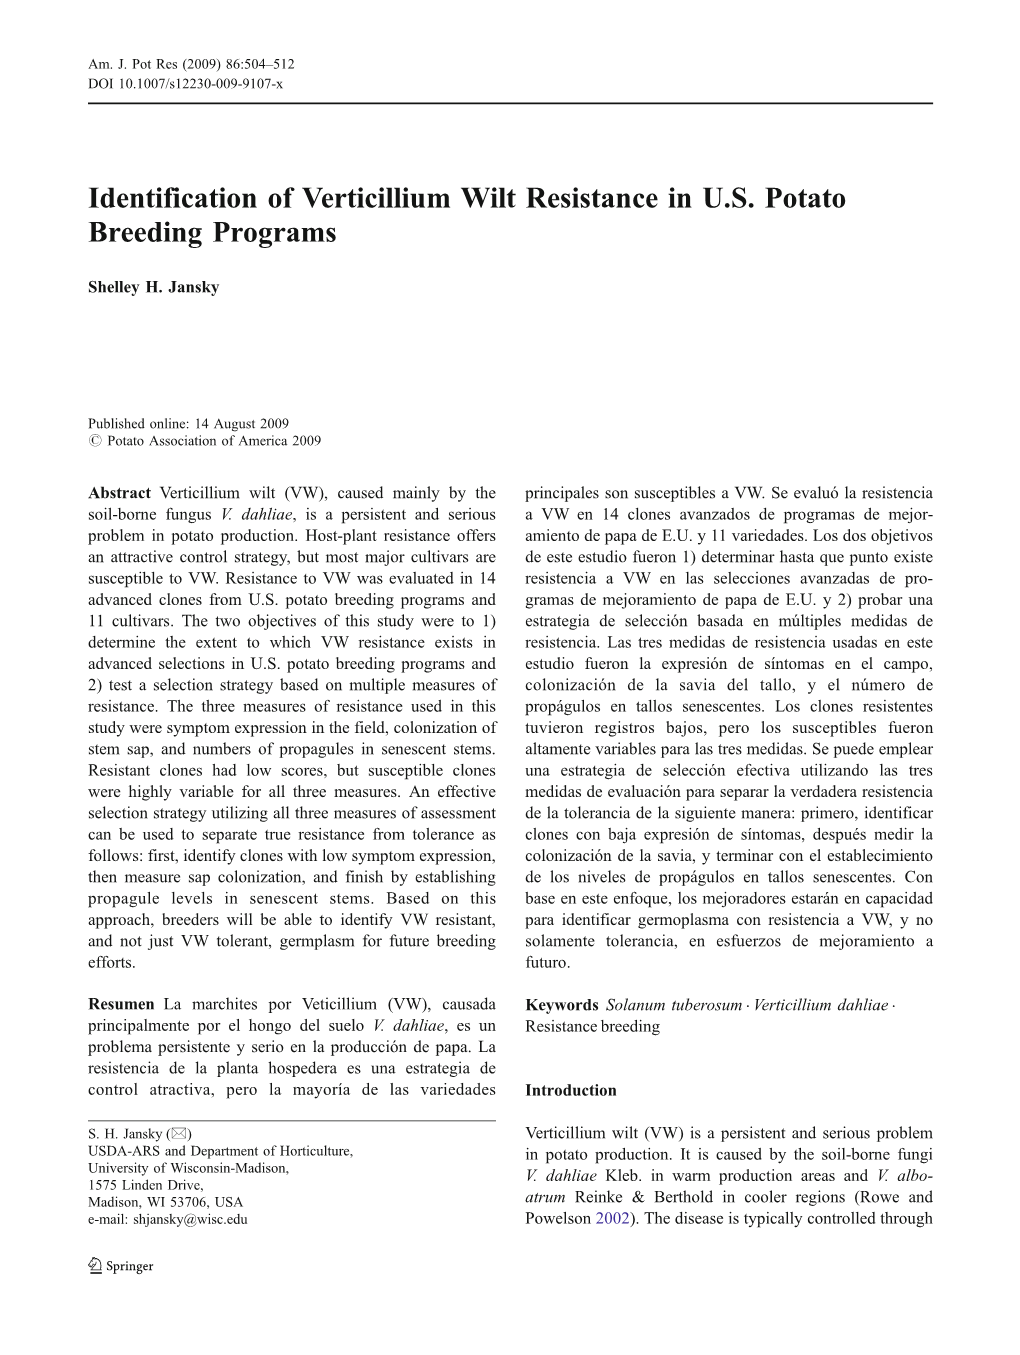 Identification of Verticillium Wilt Resistance in U.S. Potato Breeding Programs